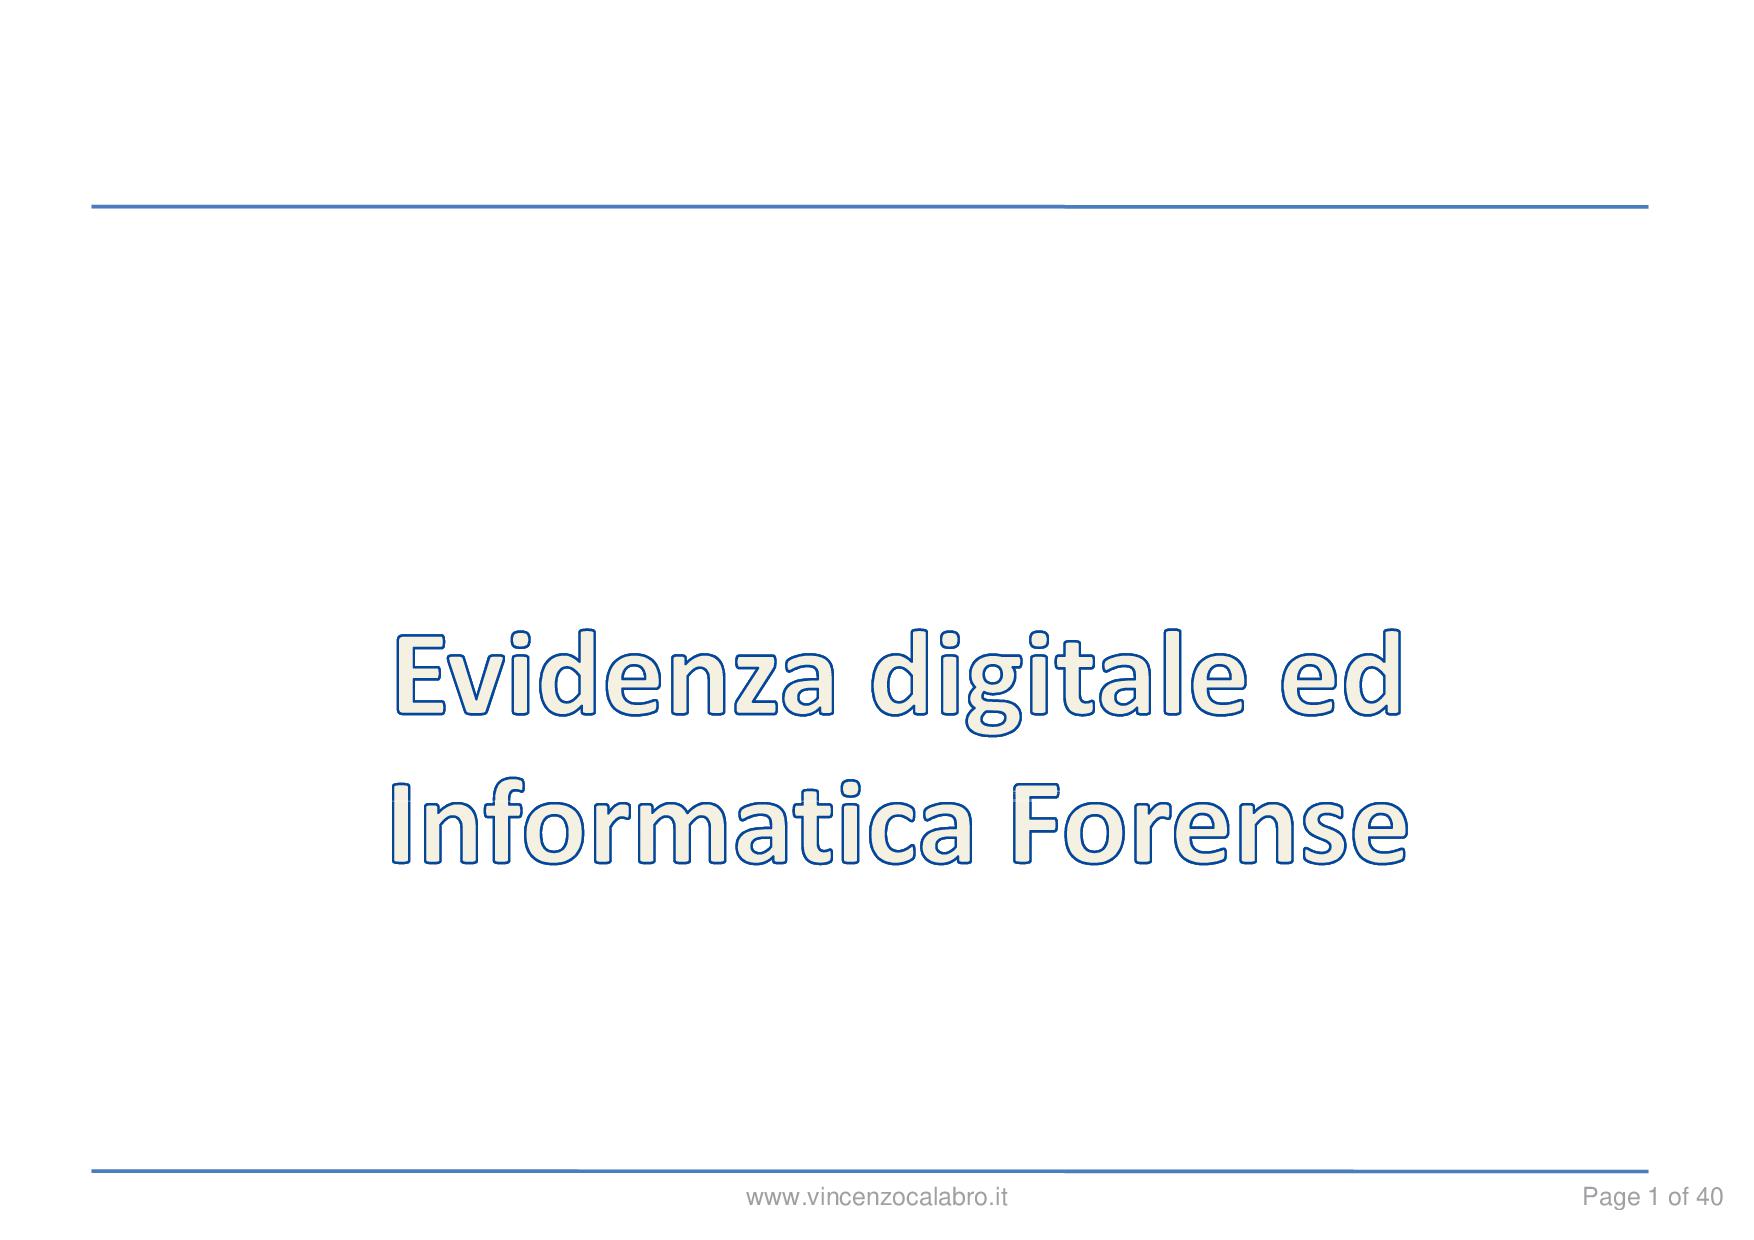 Vincenzo Calabro' | Evidenza Digitale e Informatica Forense